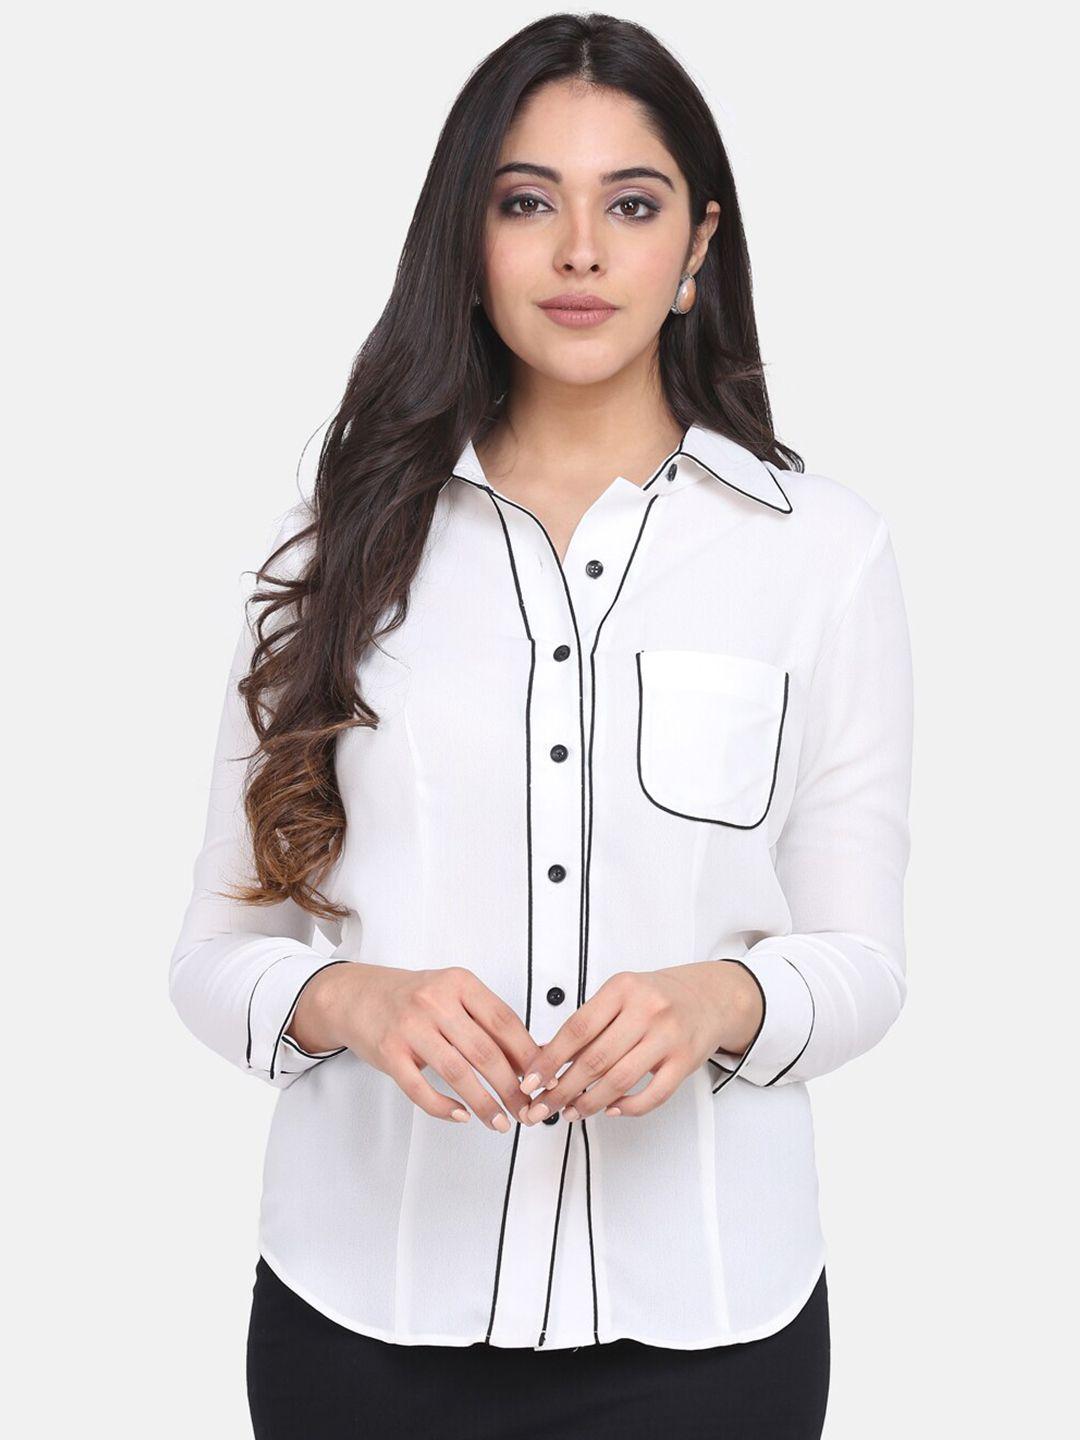 powersutra-women-white-formal--collared-shirt